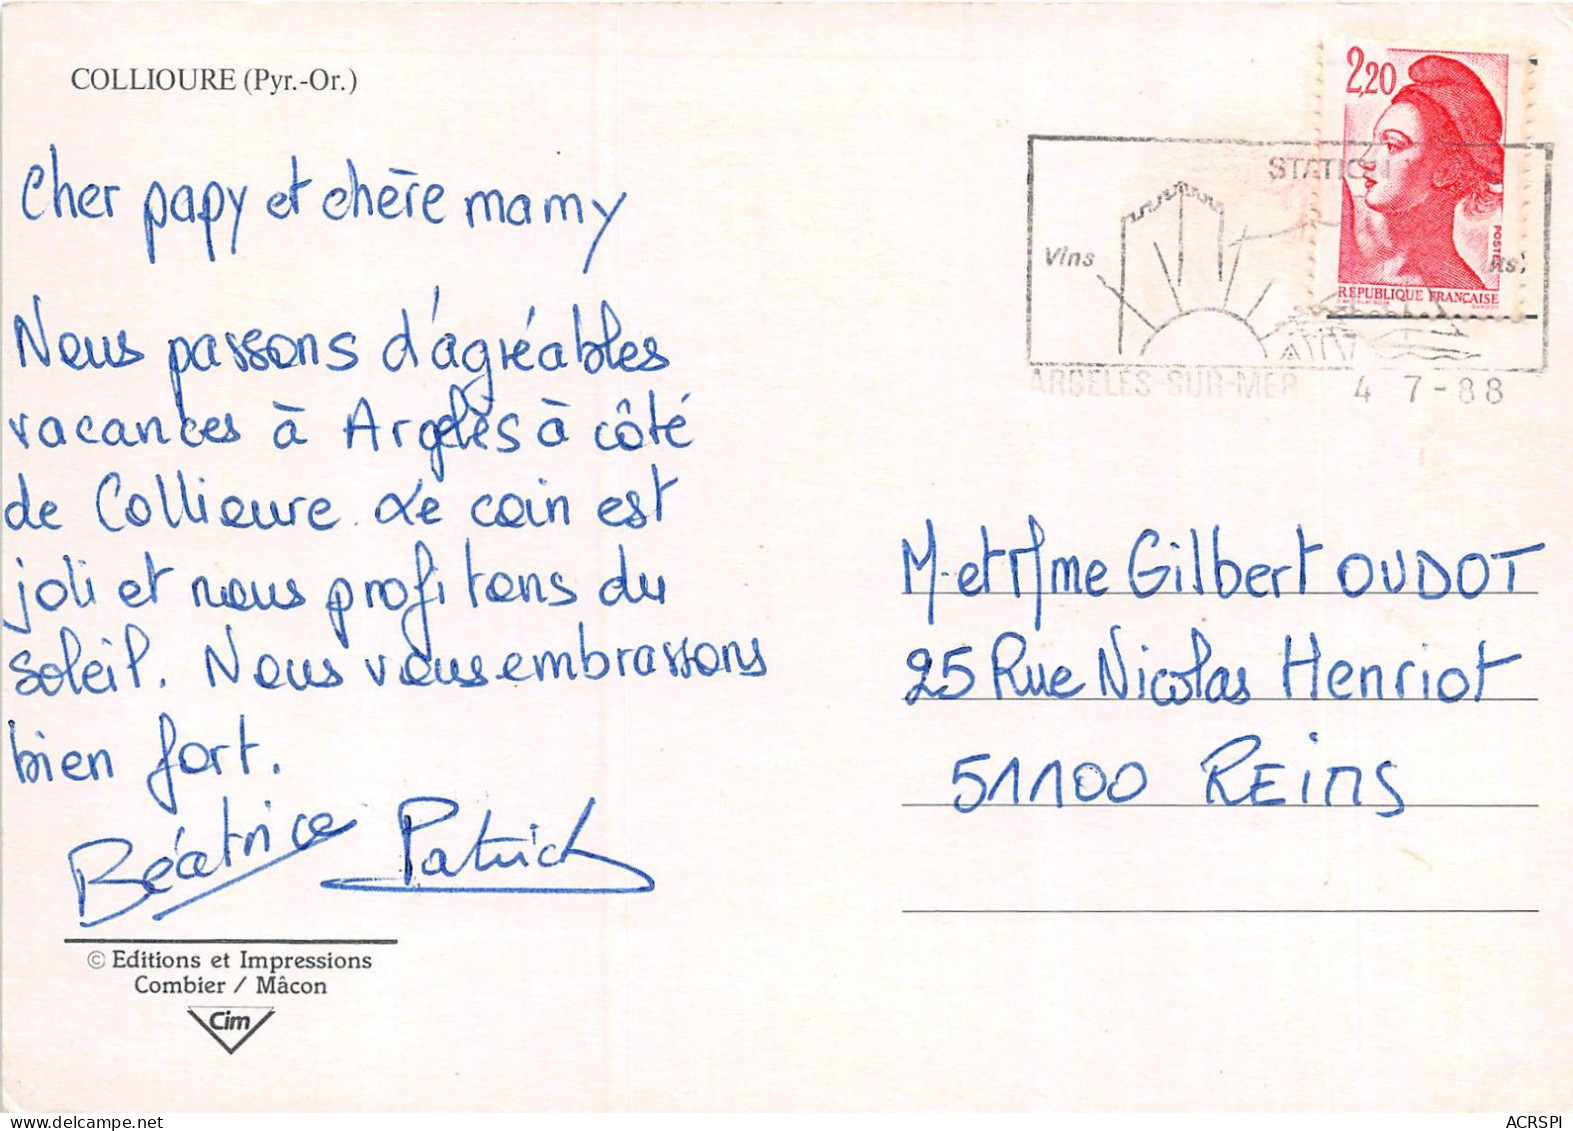 COLLIOURE 8(scan Recto-verso) MA2097 - Collioure